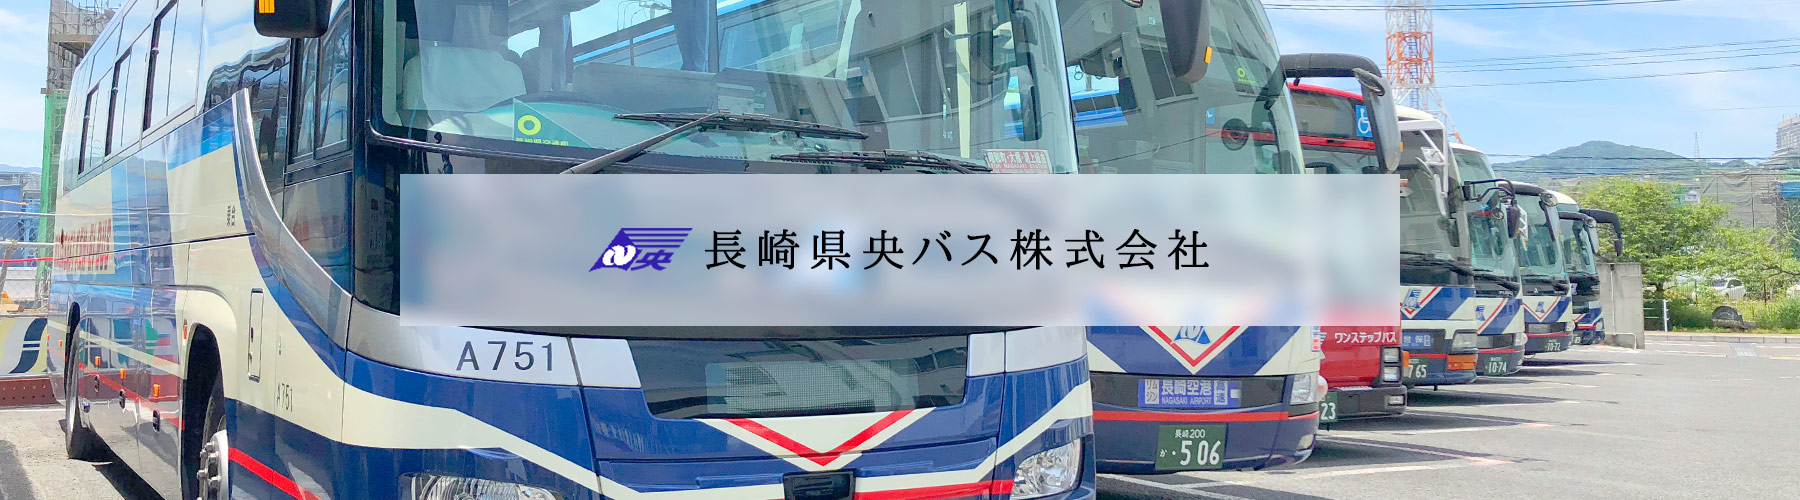 長崎県央バス株式会社